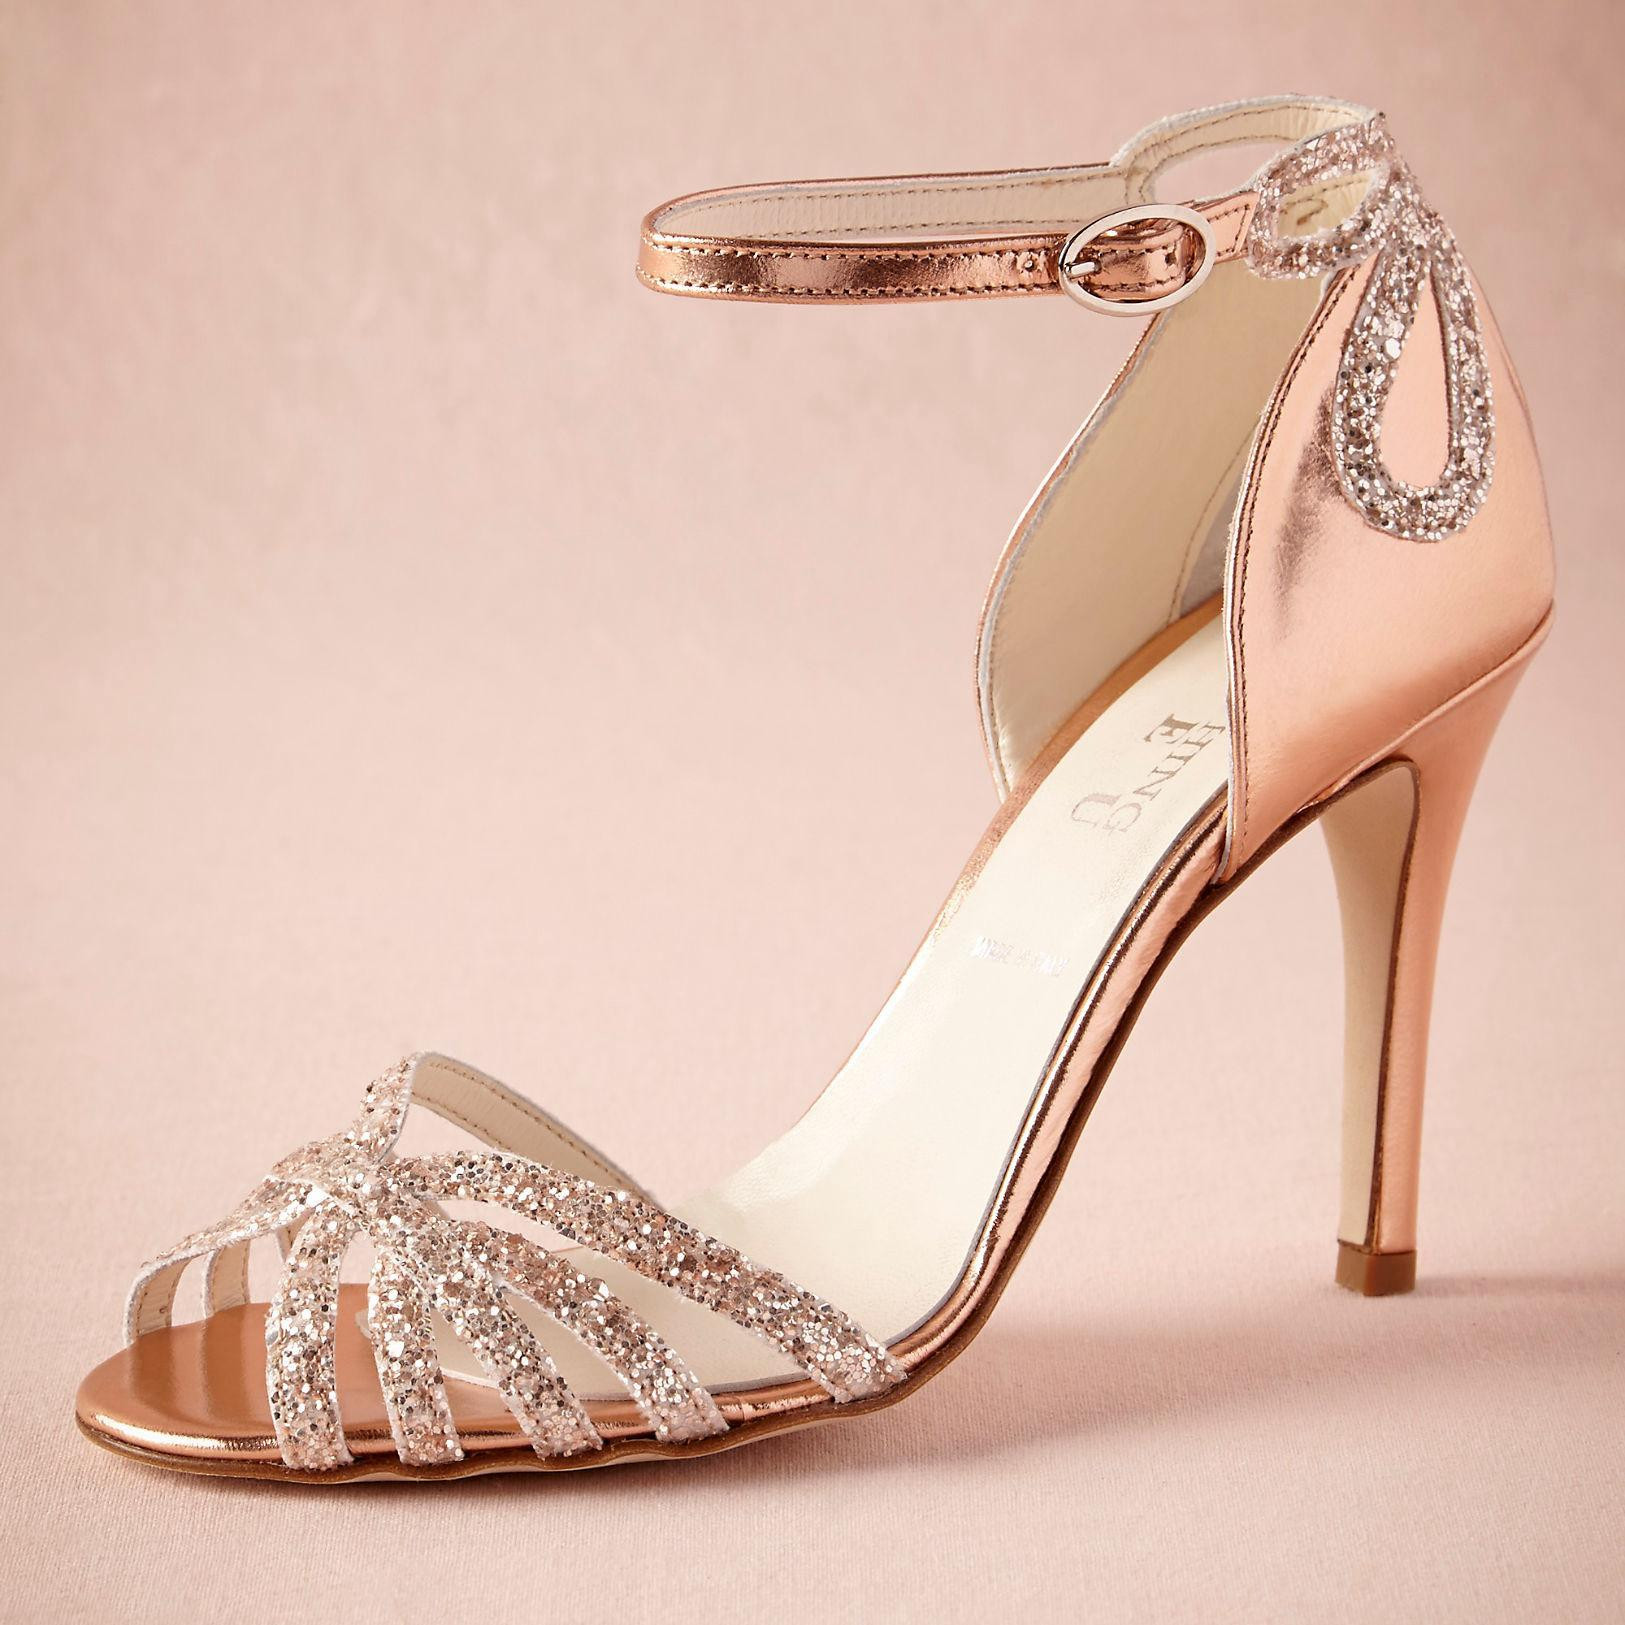 Rose Gold Wedding Shoes
 Rose Gold Glittered Heel Real Wedding Shoes Pumps Sandals